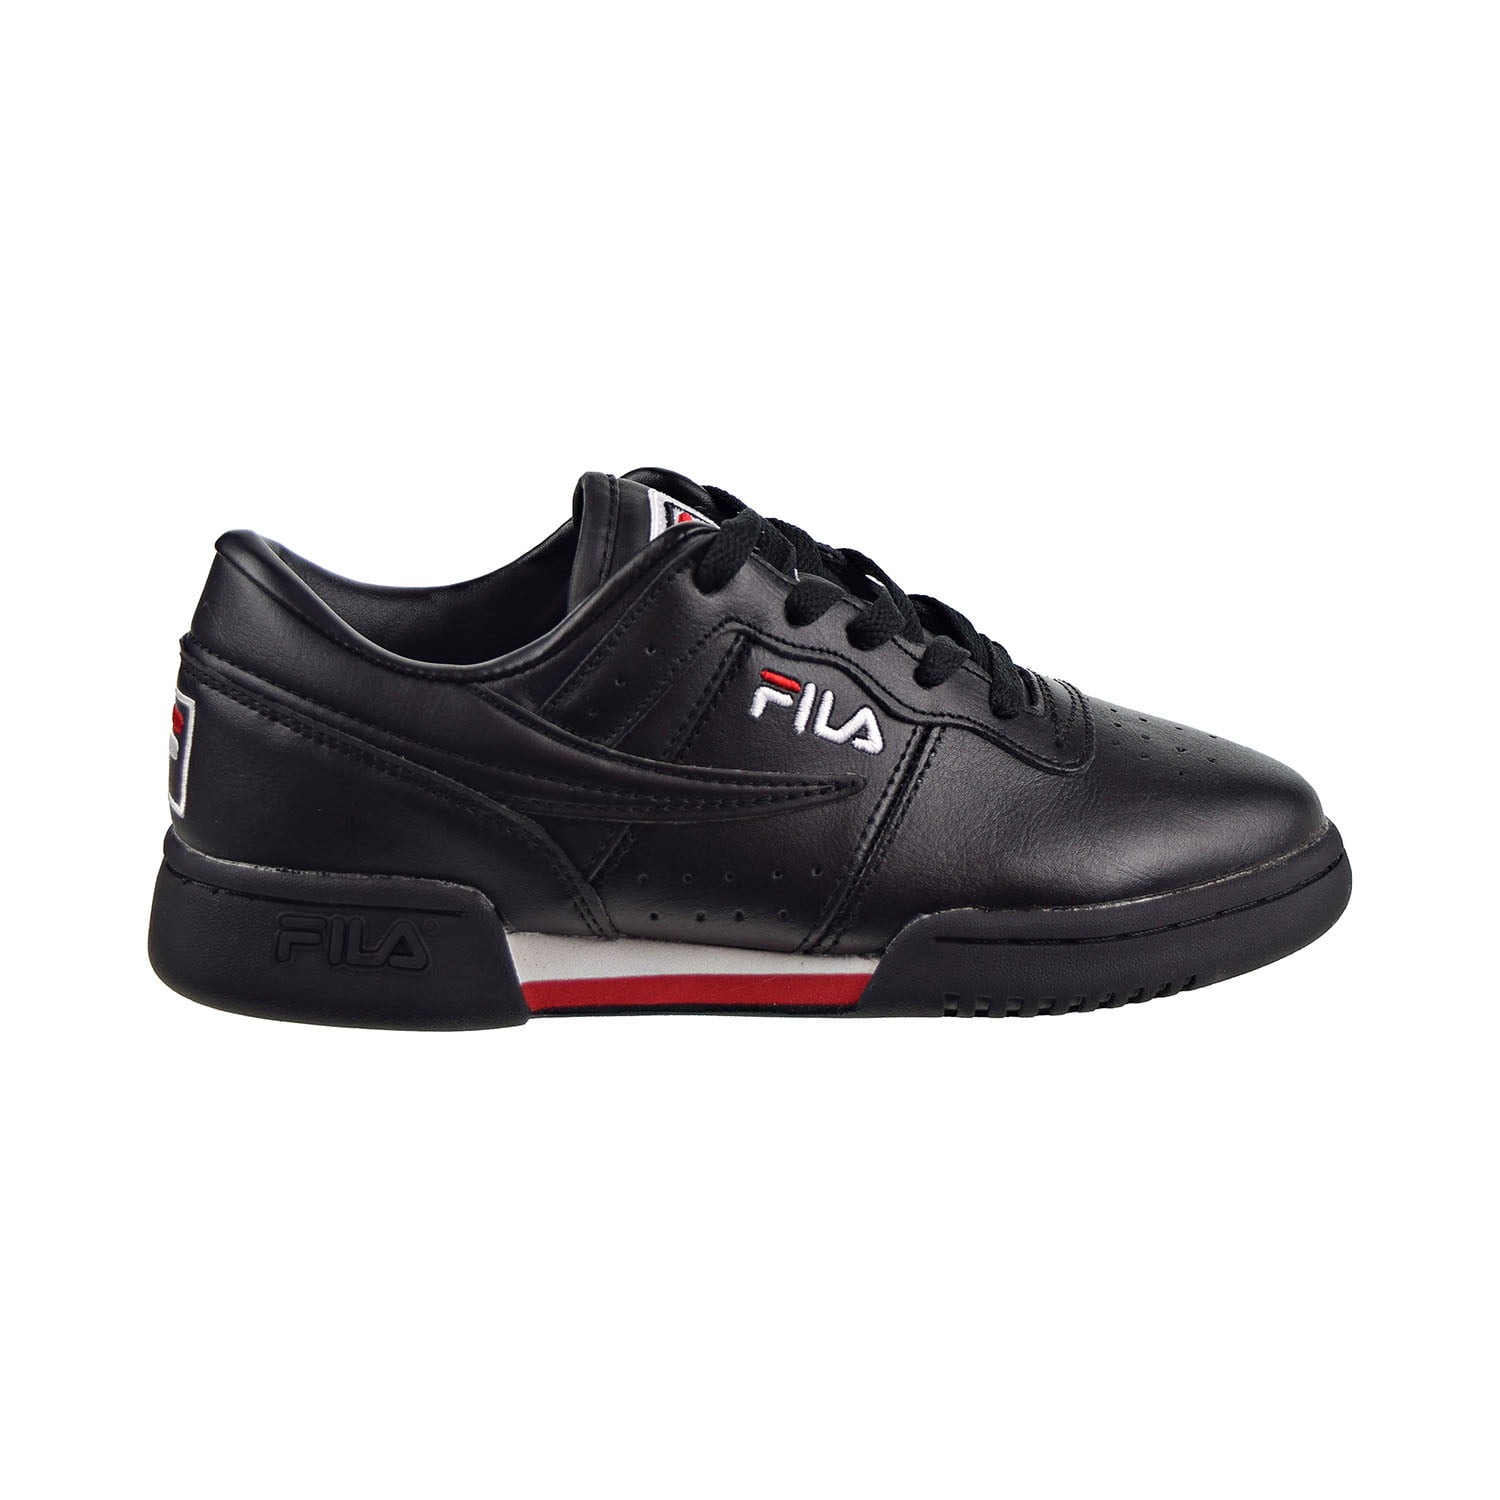 FILA - Fila Original Fitness Big/Little Kids' Shoes Black/White/Red ...